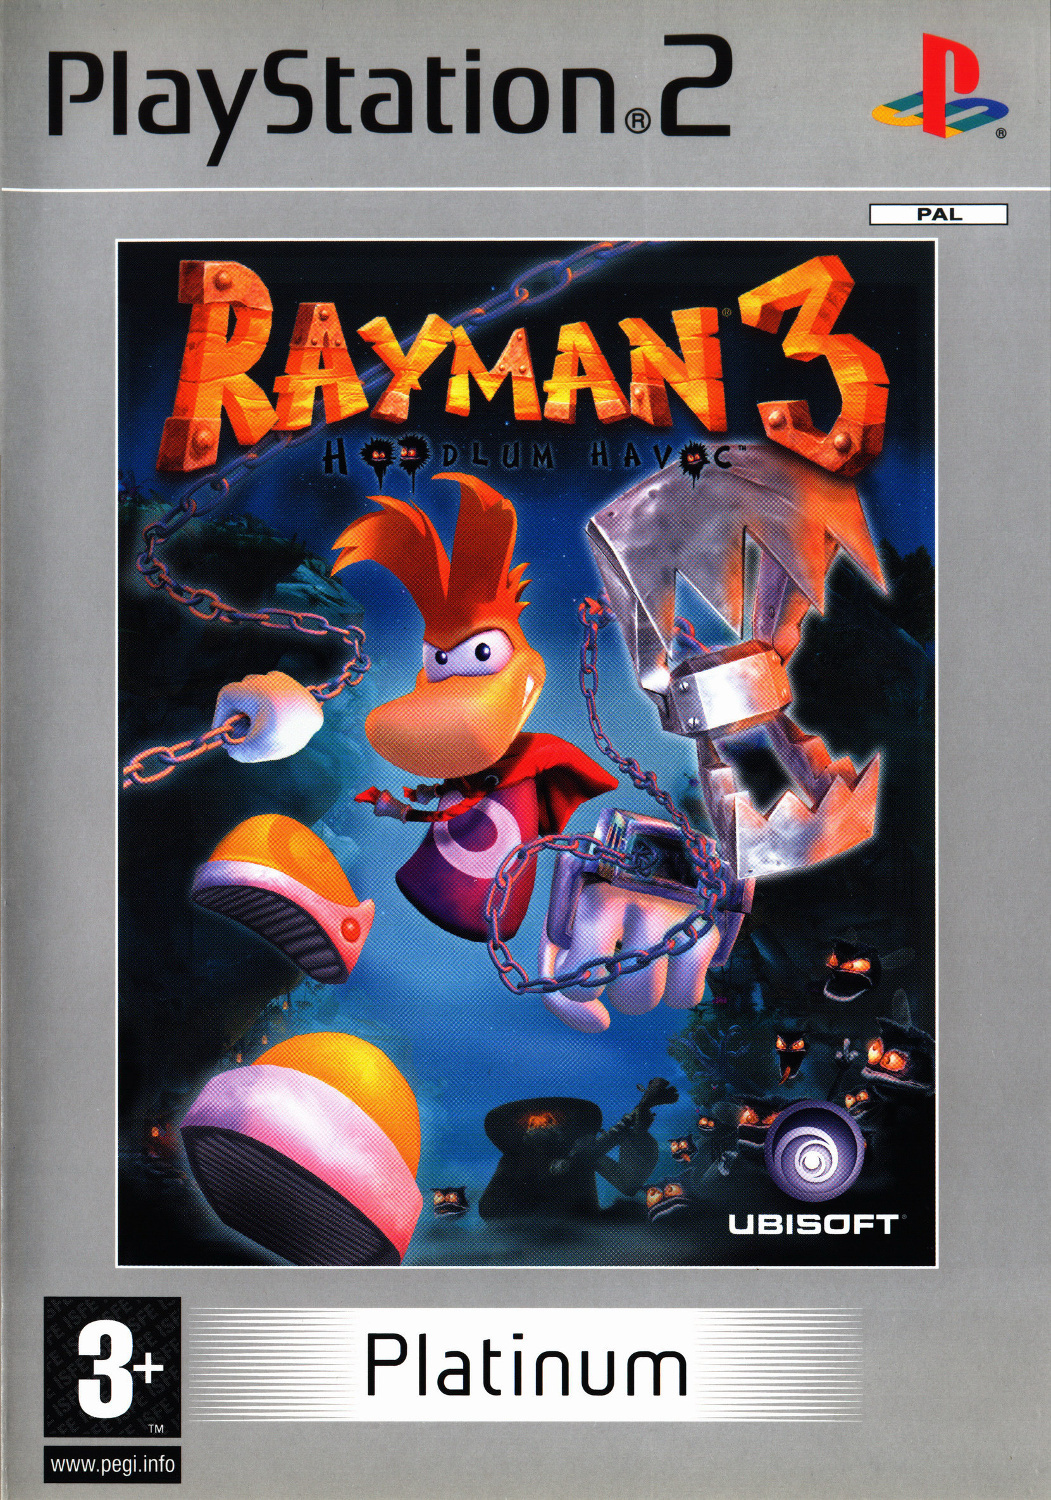 download rayman 3 hoodlum havoc nintendo switch